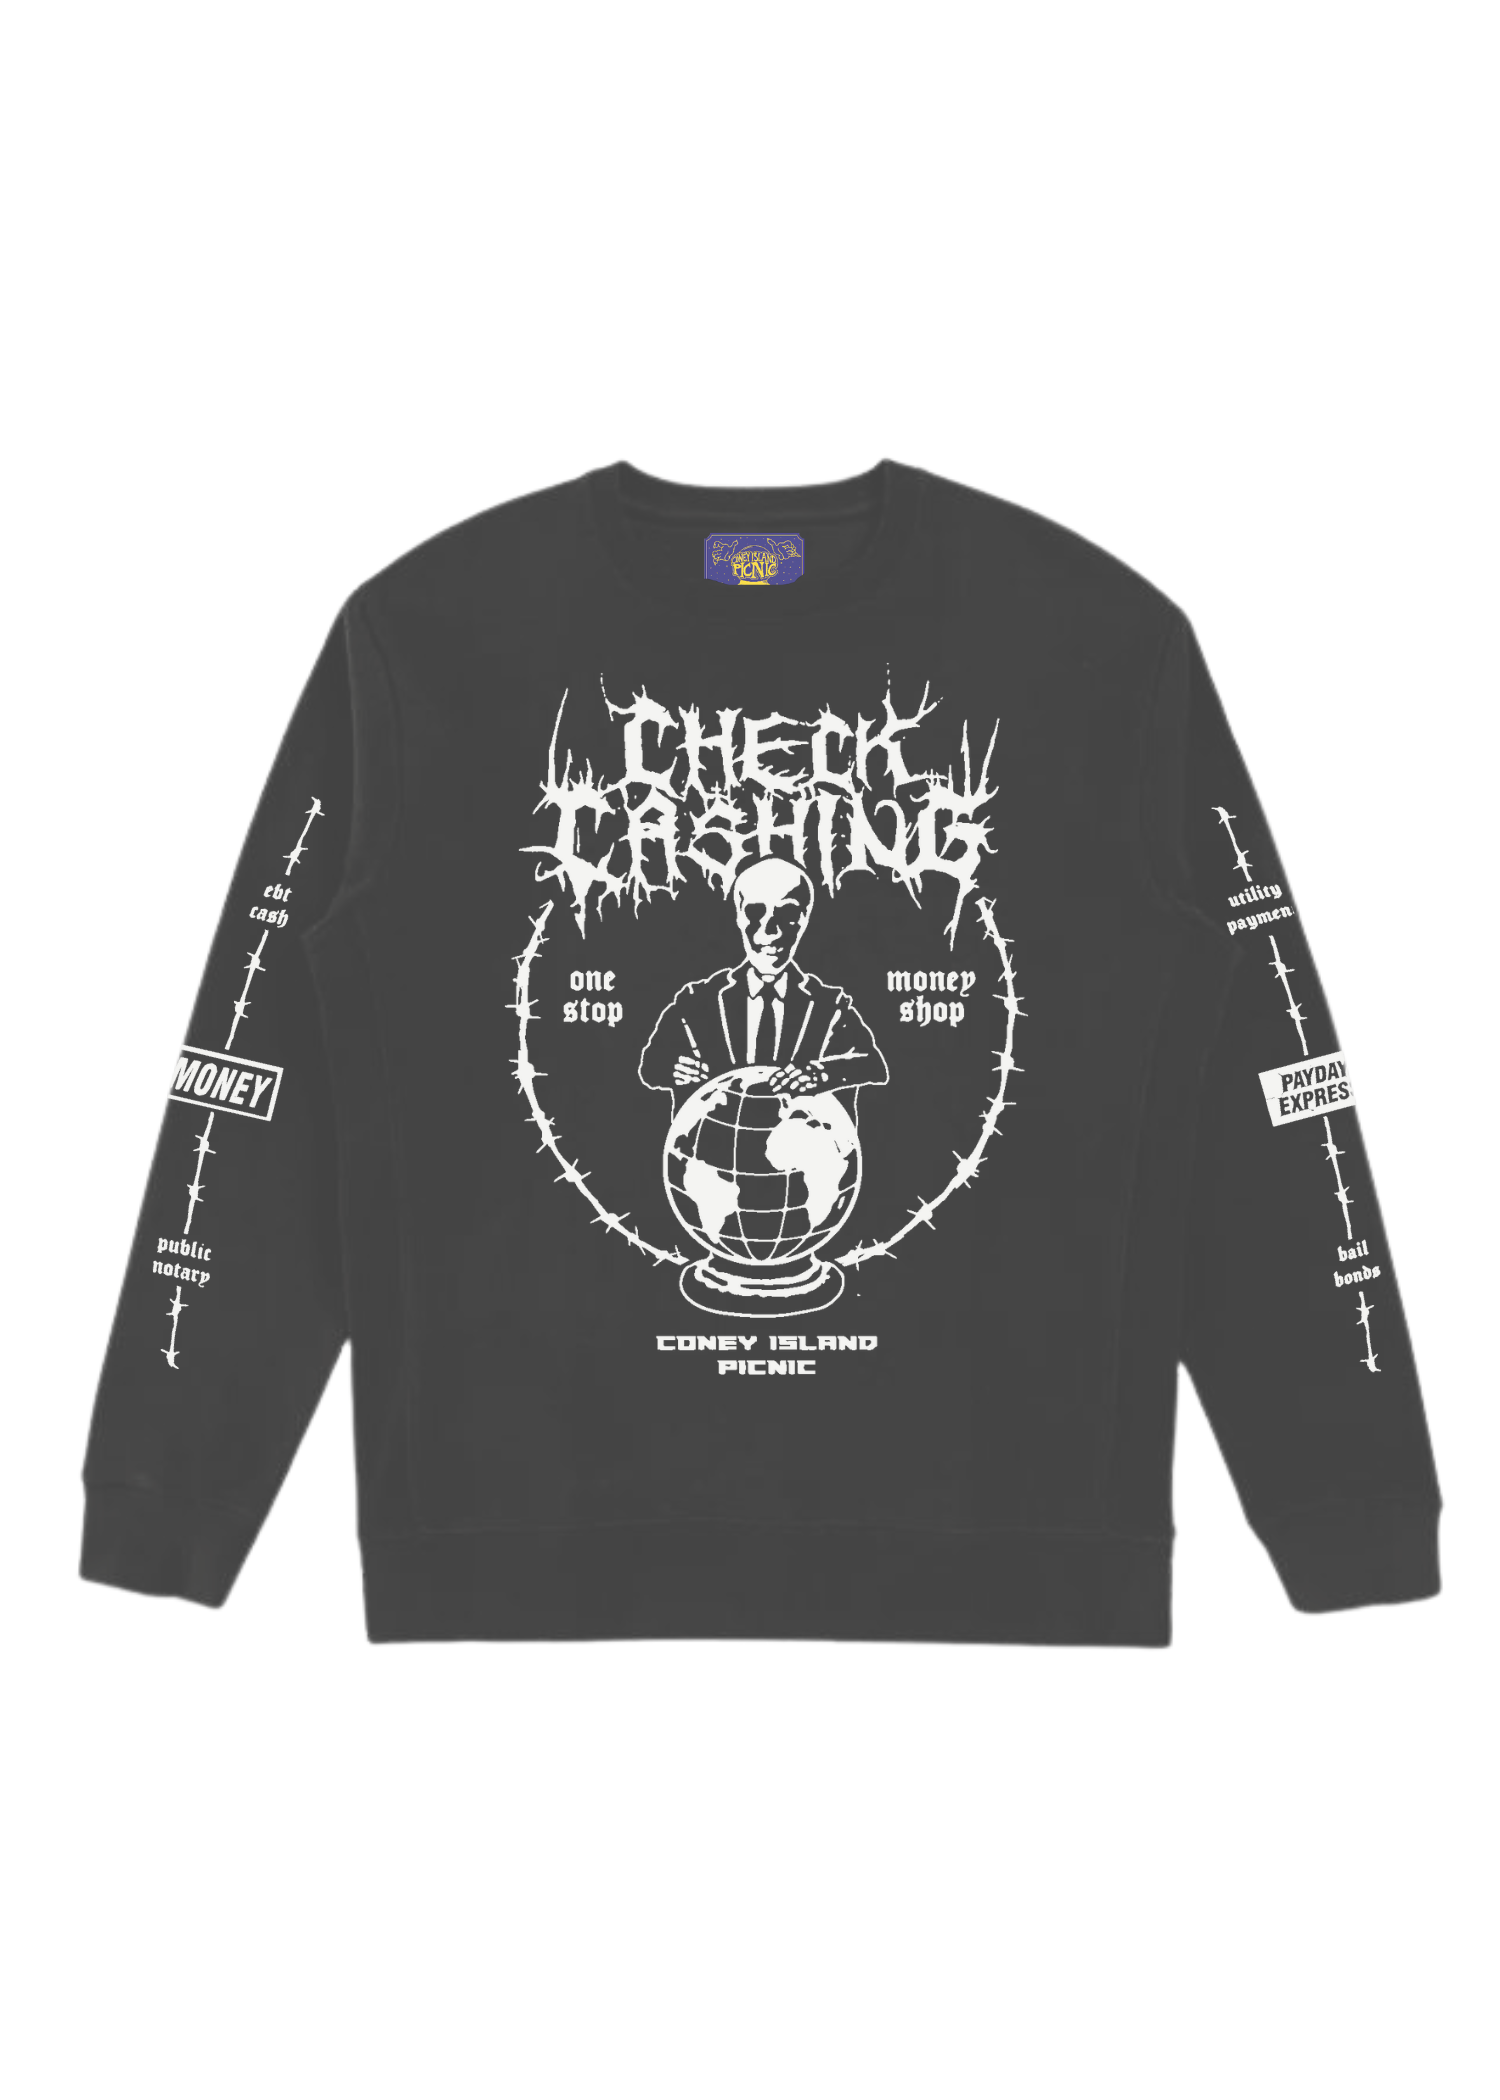 Check Cashing Graphic Sweatshirt